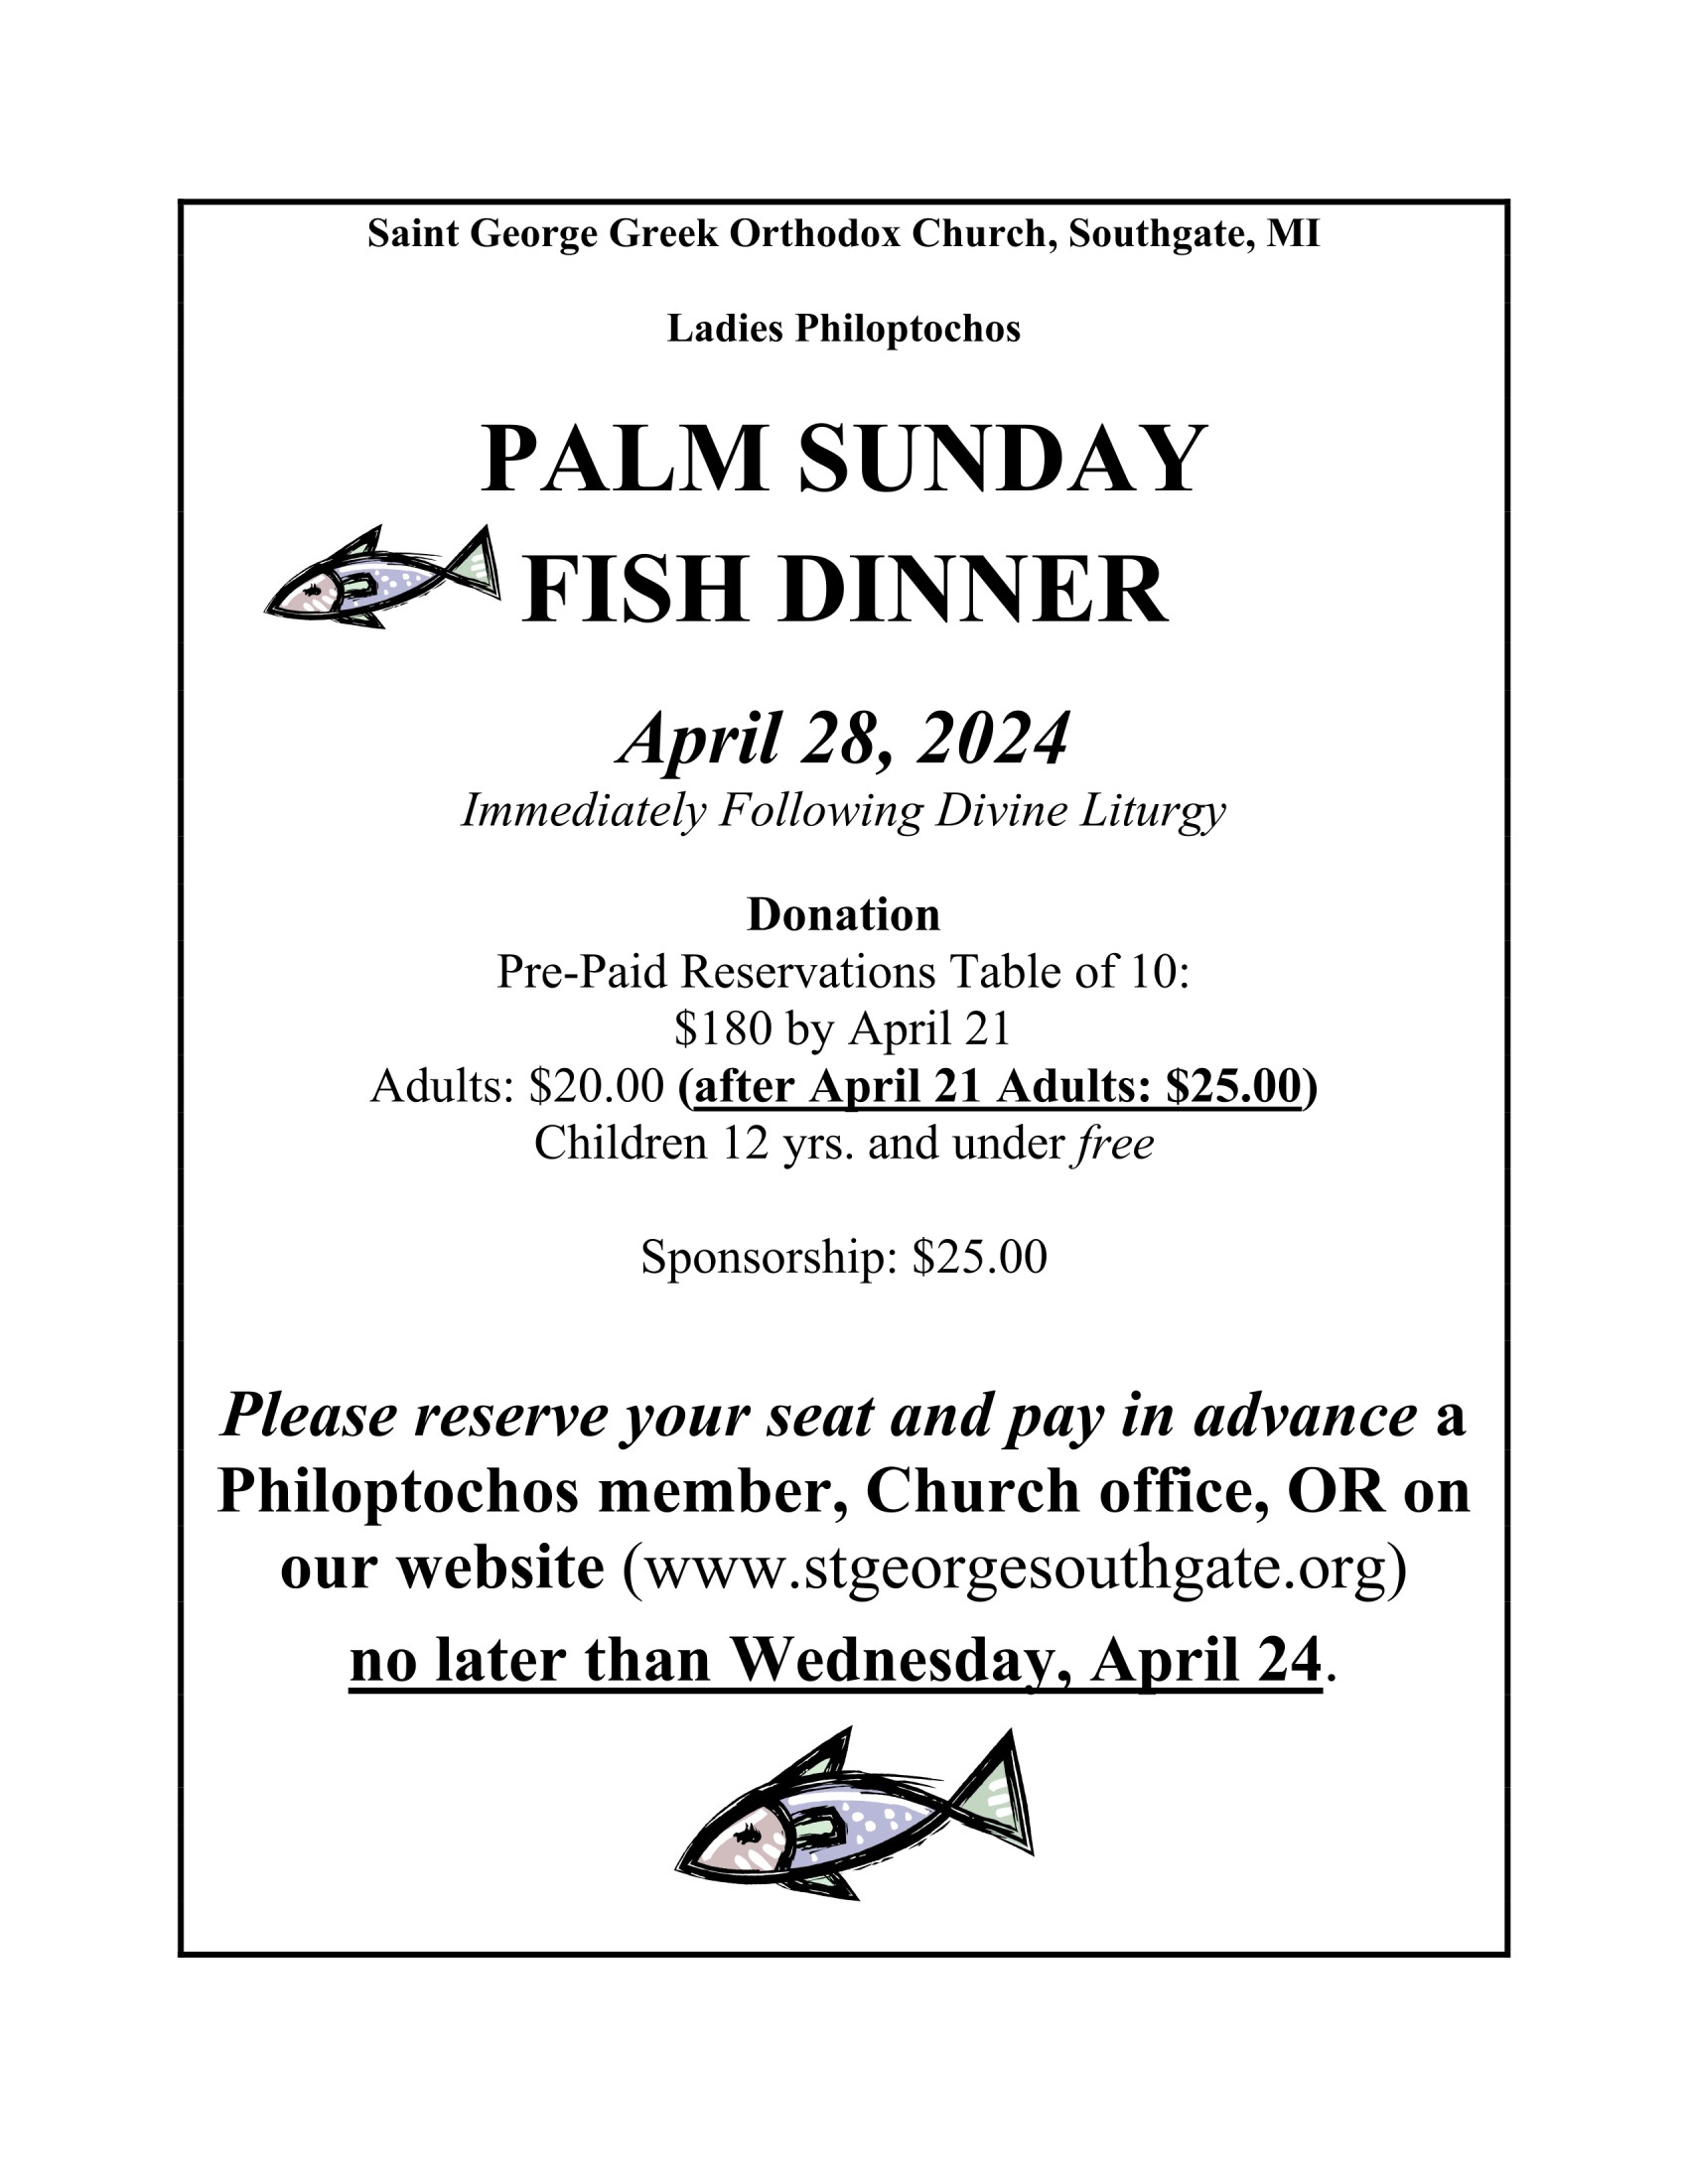 Palm Sunday Fish Luncheon